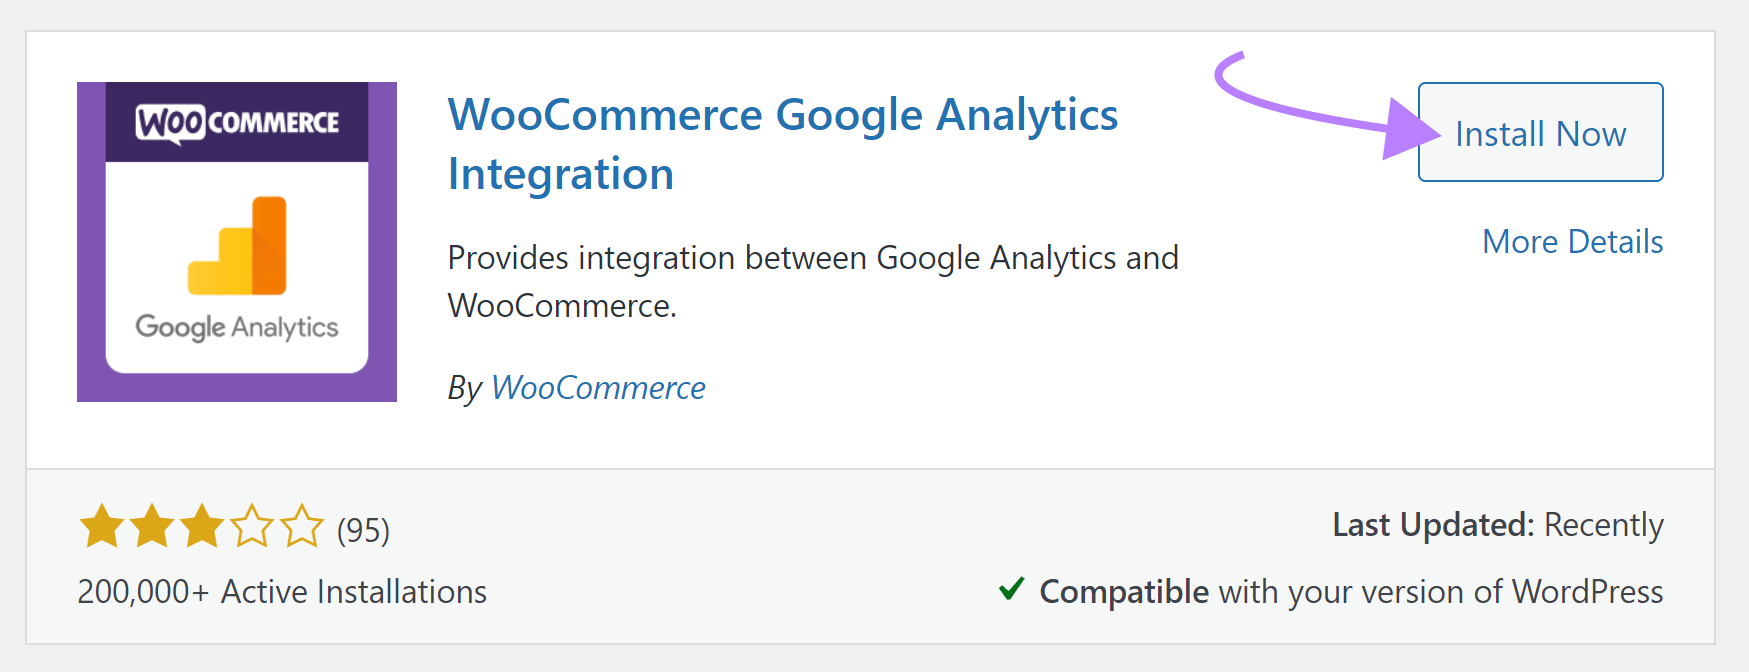 WooCommerce Google Analytics Integration installation page